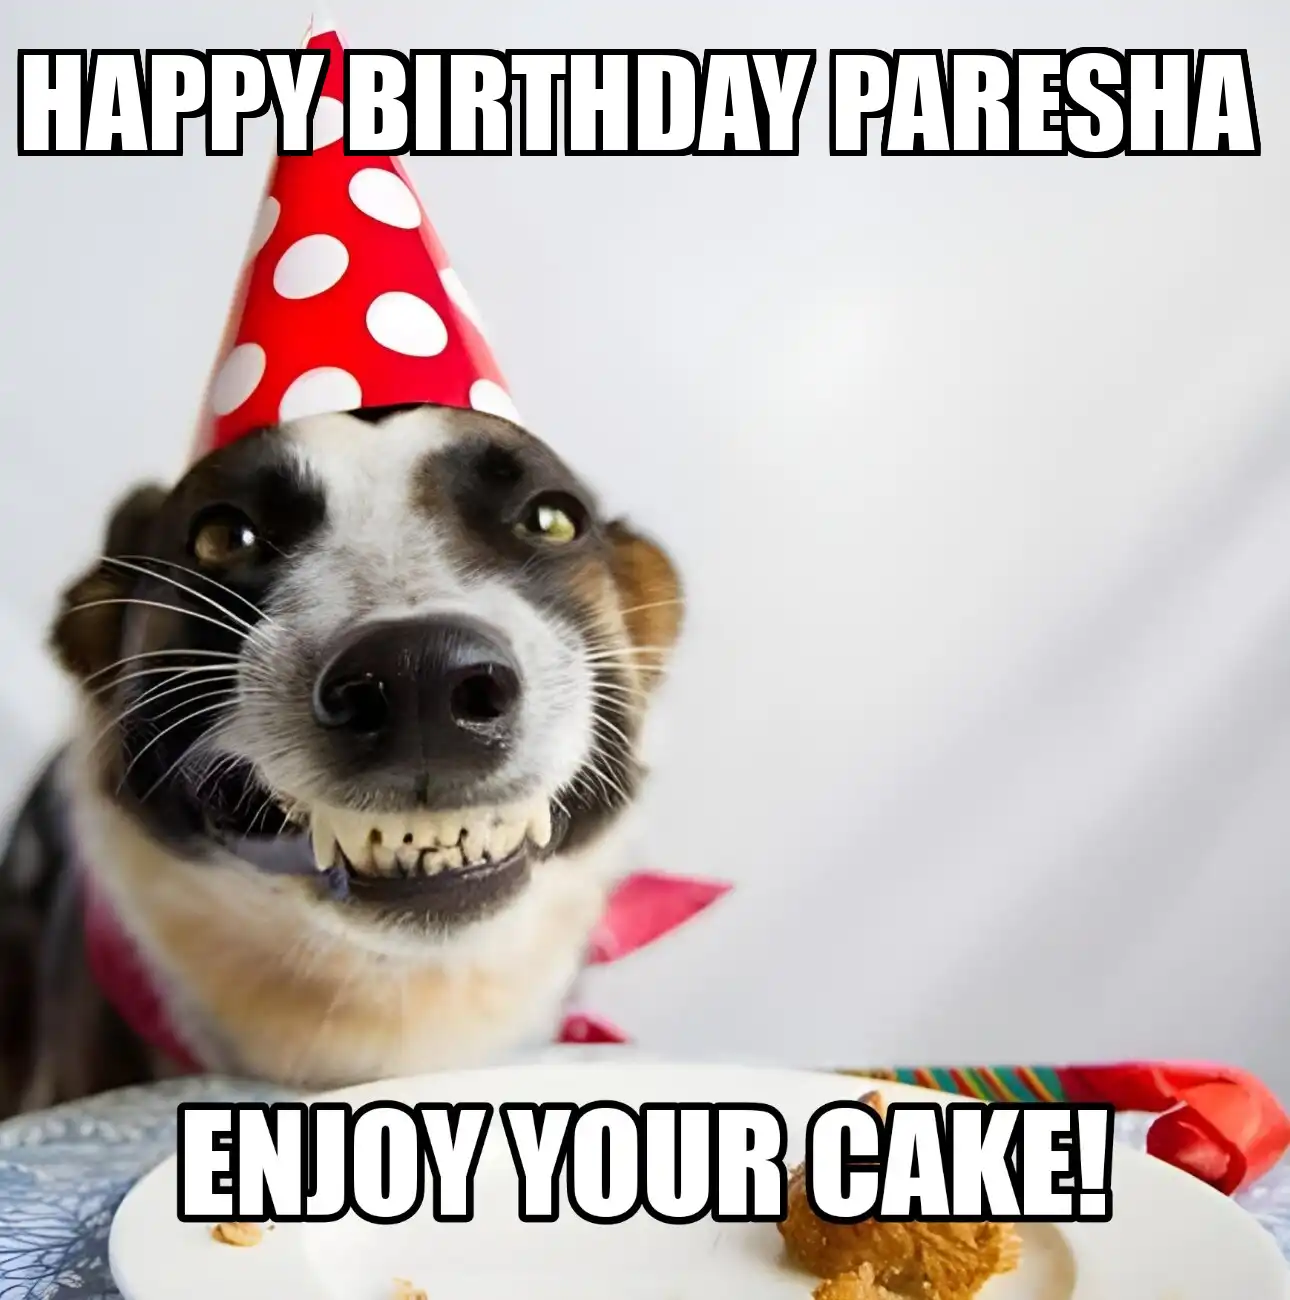 Happy Birthday Paresha Enjoy Your Cake Dog Meme